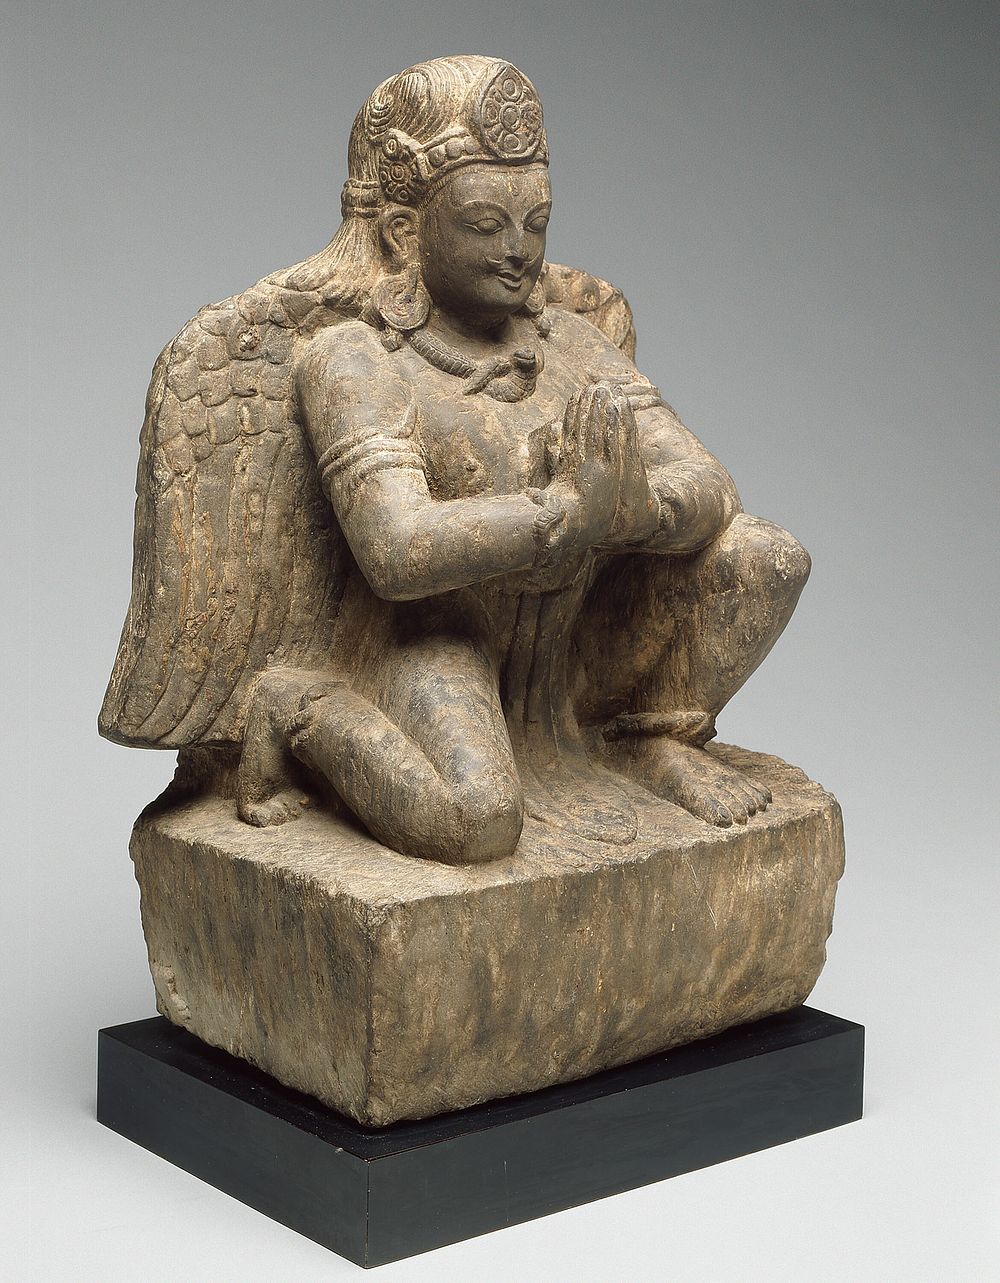 God Vishnu's Mount, Garuda, Kneeling with Hands in Gesture of Adoration (Anjalimudra)